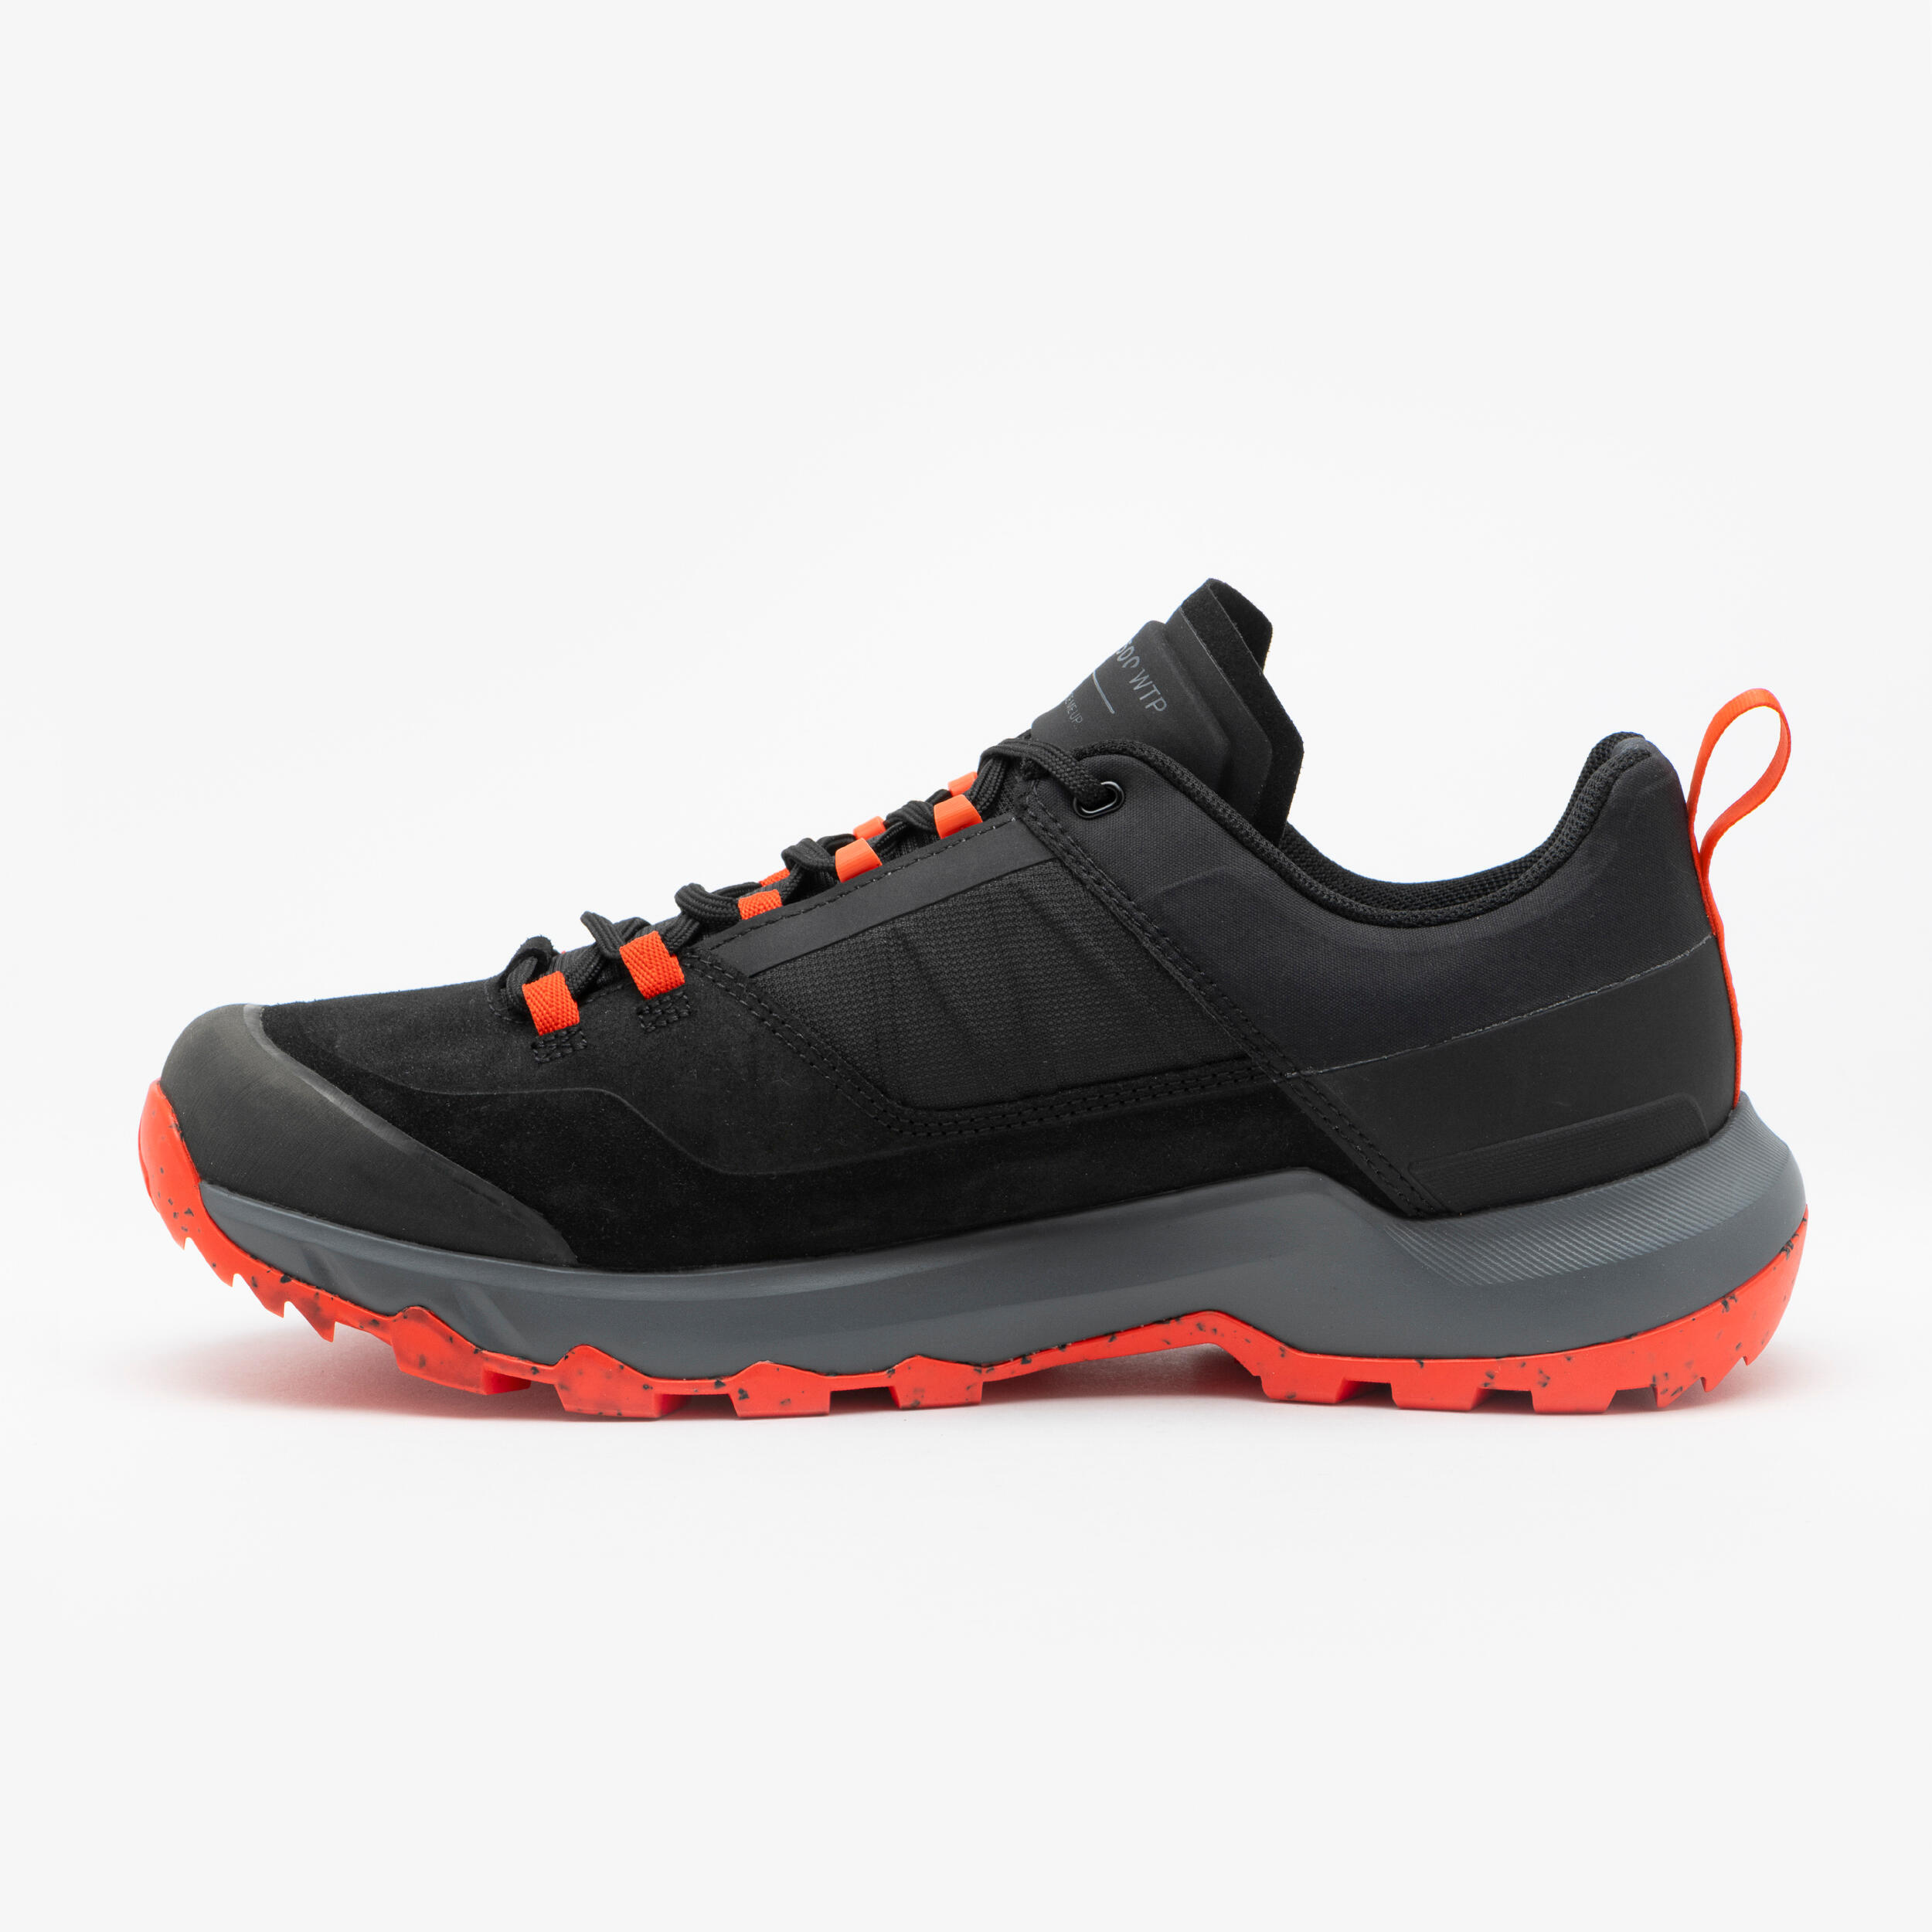 Men's waterproof hiking shoes - MH500 black 4/7